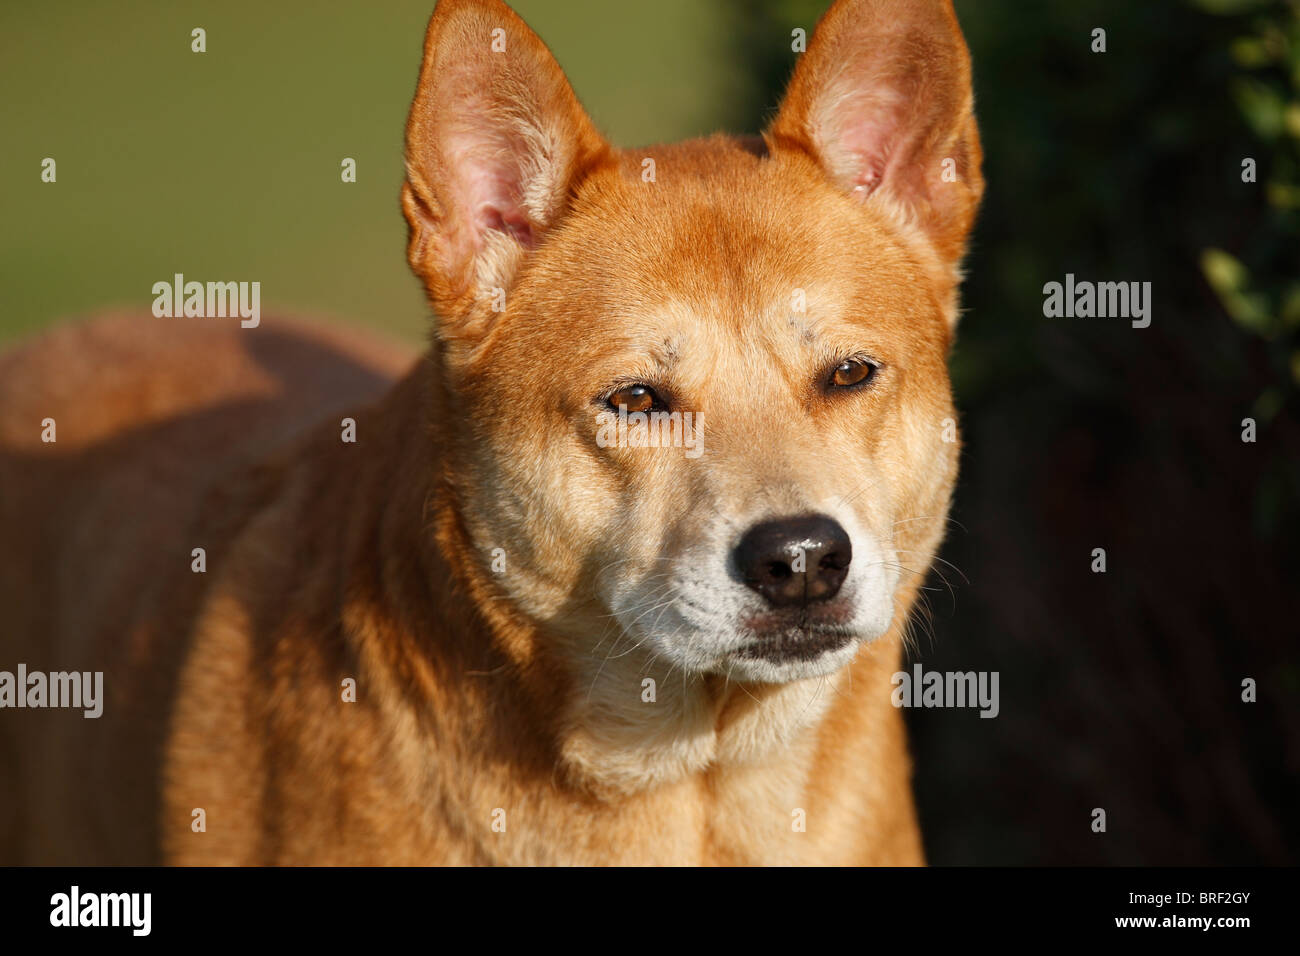 Dog, Red Heeler Cattle Dog) portrait Stock Photo - Alamy